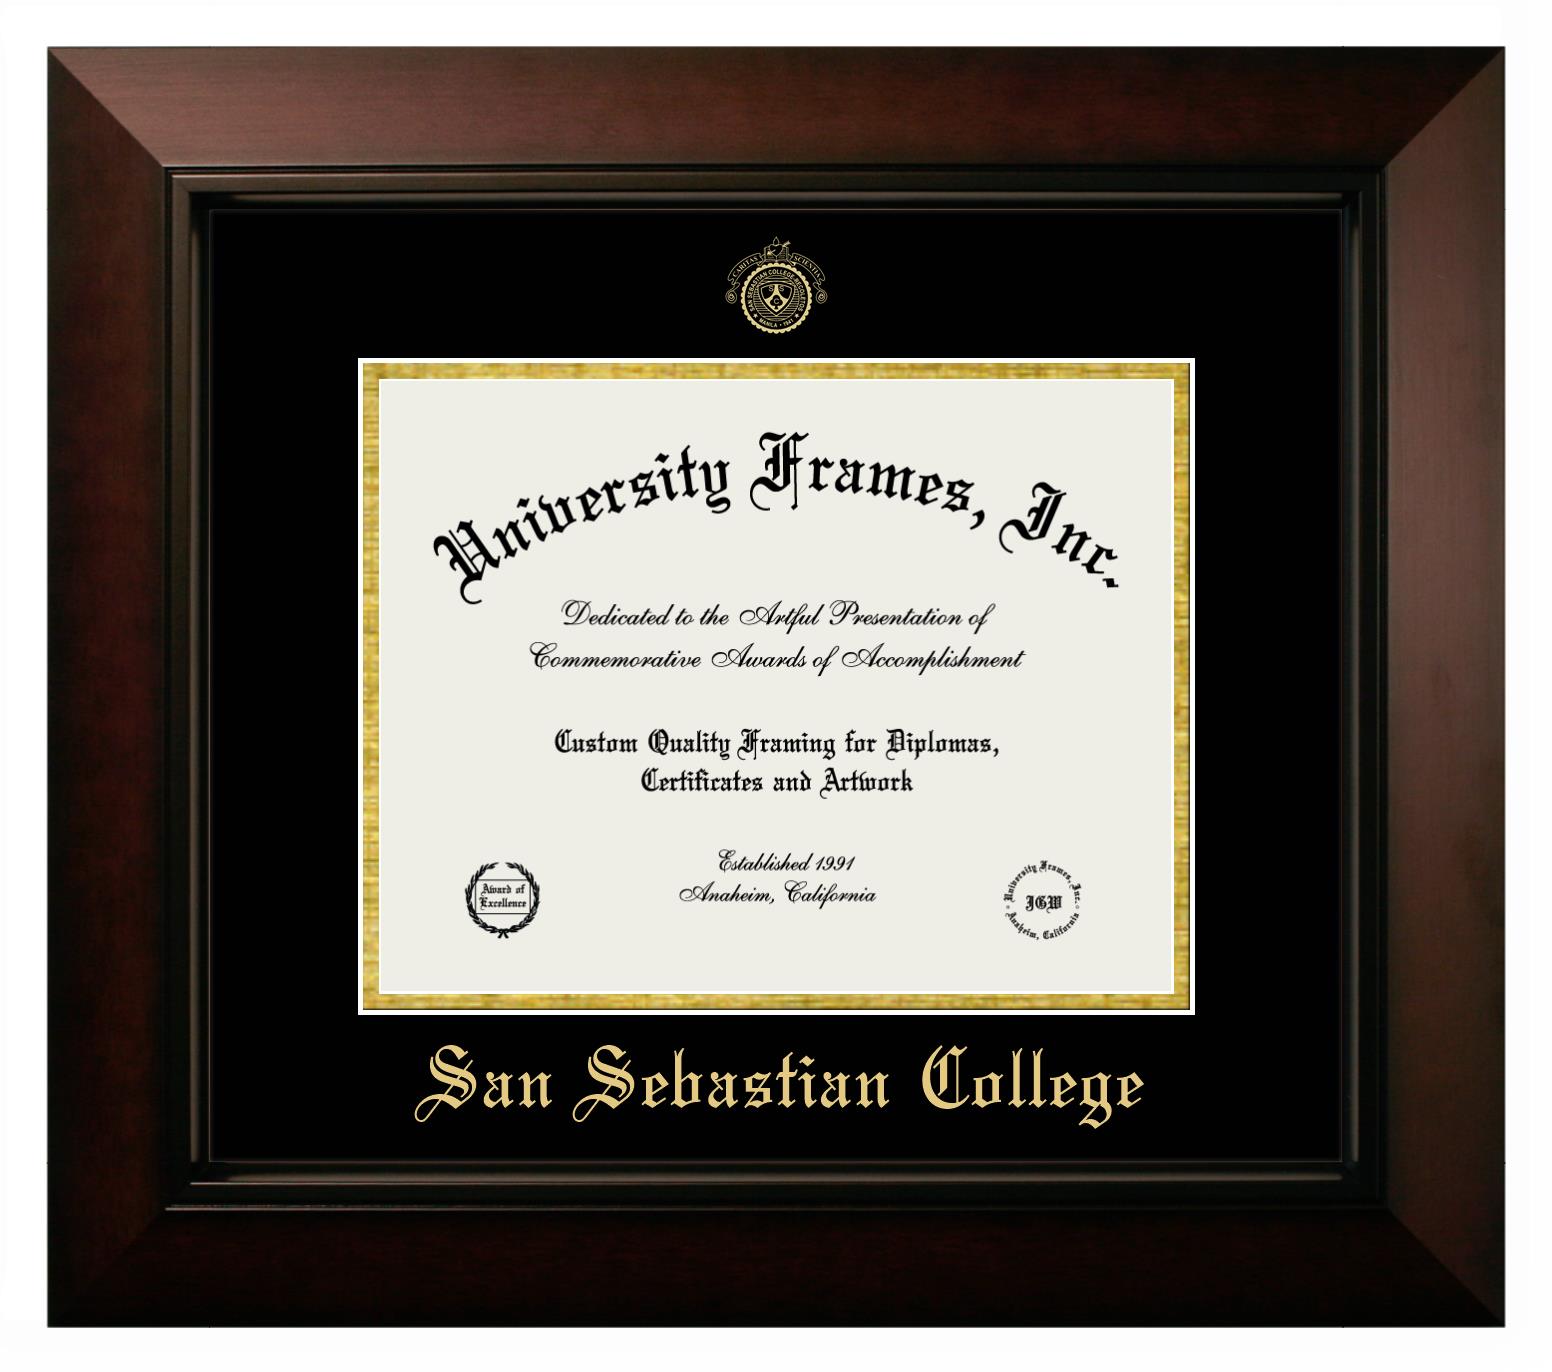 San Sebastian College Diploma Frame in Legacy Black Cherry with